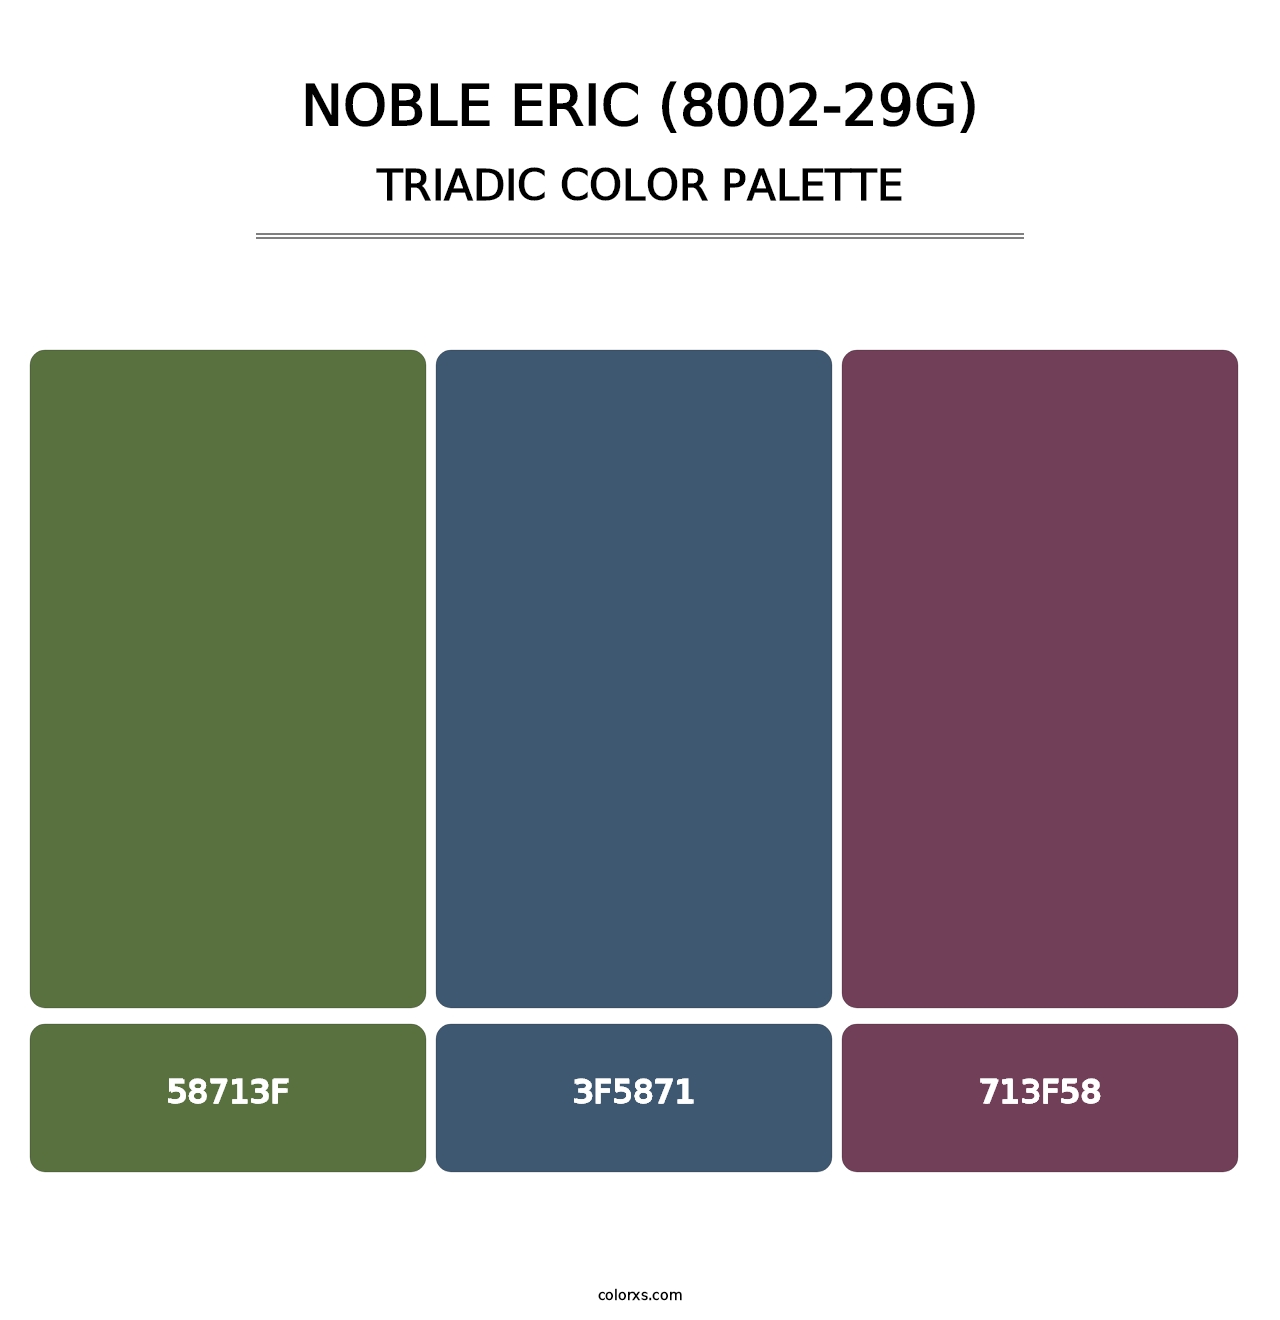 Noble Eric (8002-29G) - Triadic Color Palette